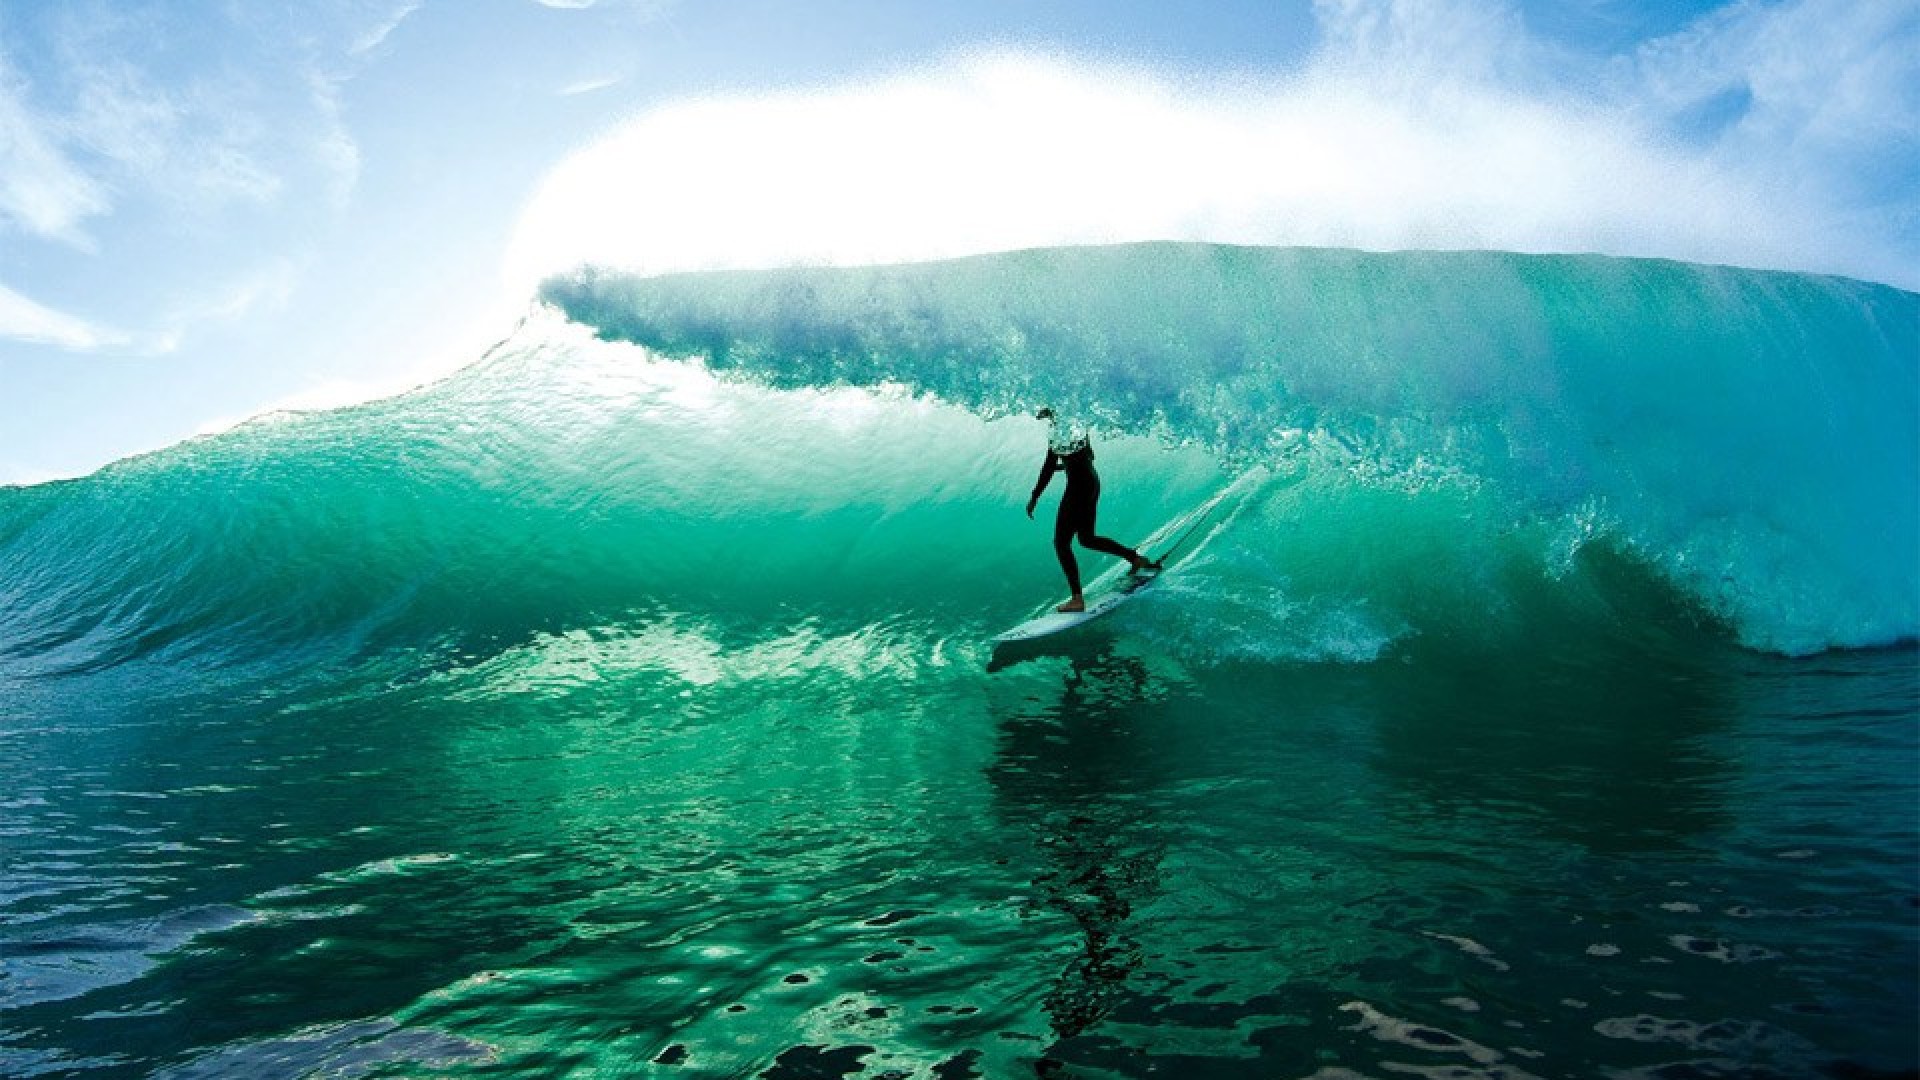 Surfing 1080p Wallpaper   Wallpaper High Definition High Quality 1920x1080